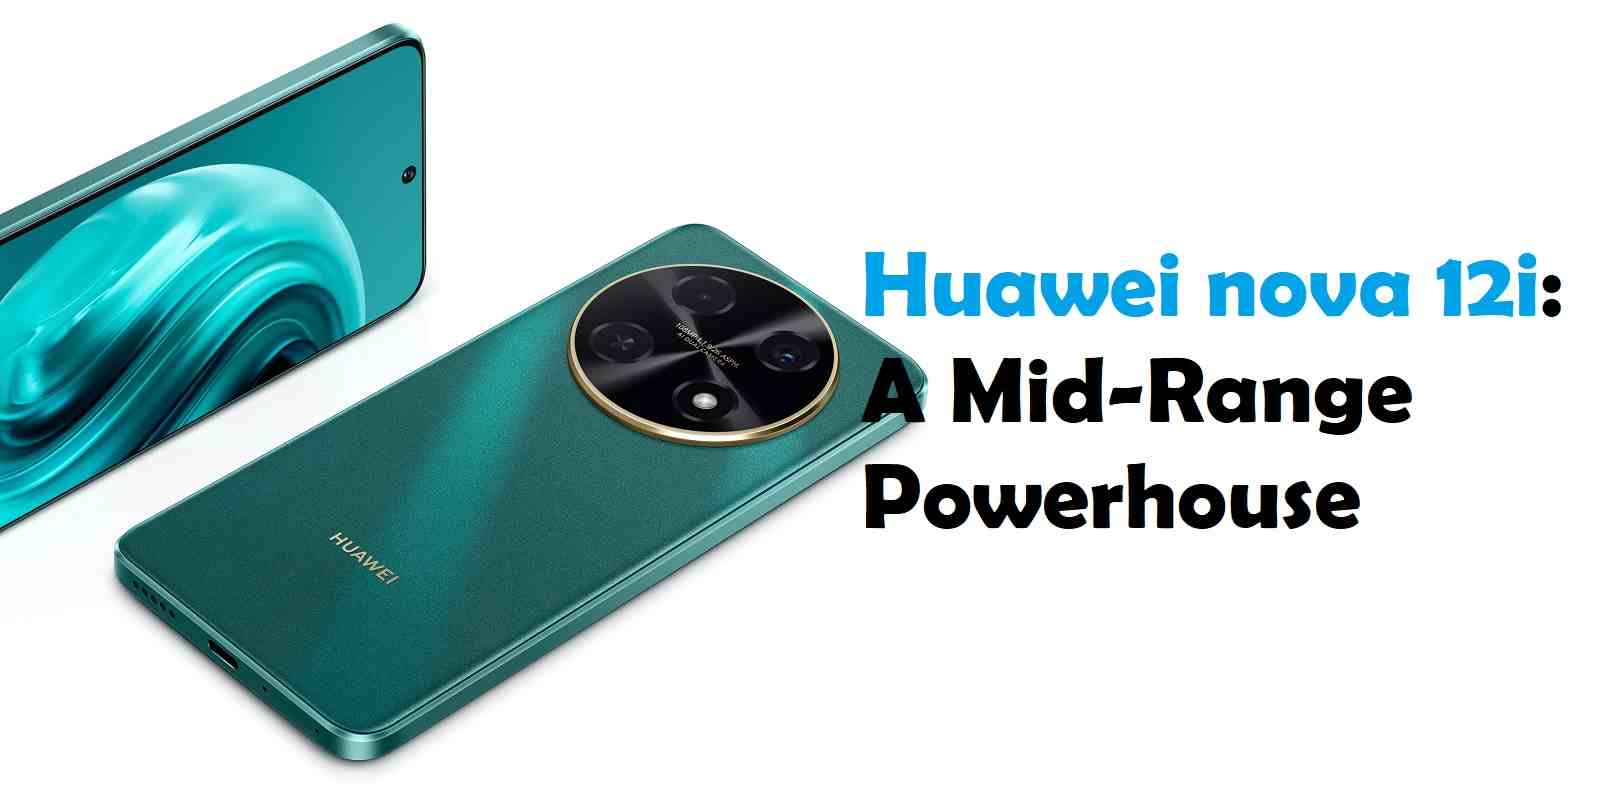 Huawei nova 12i Review